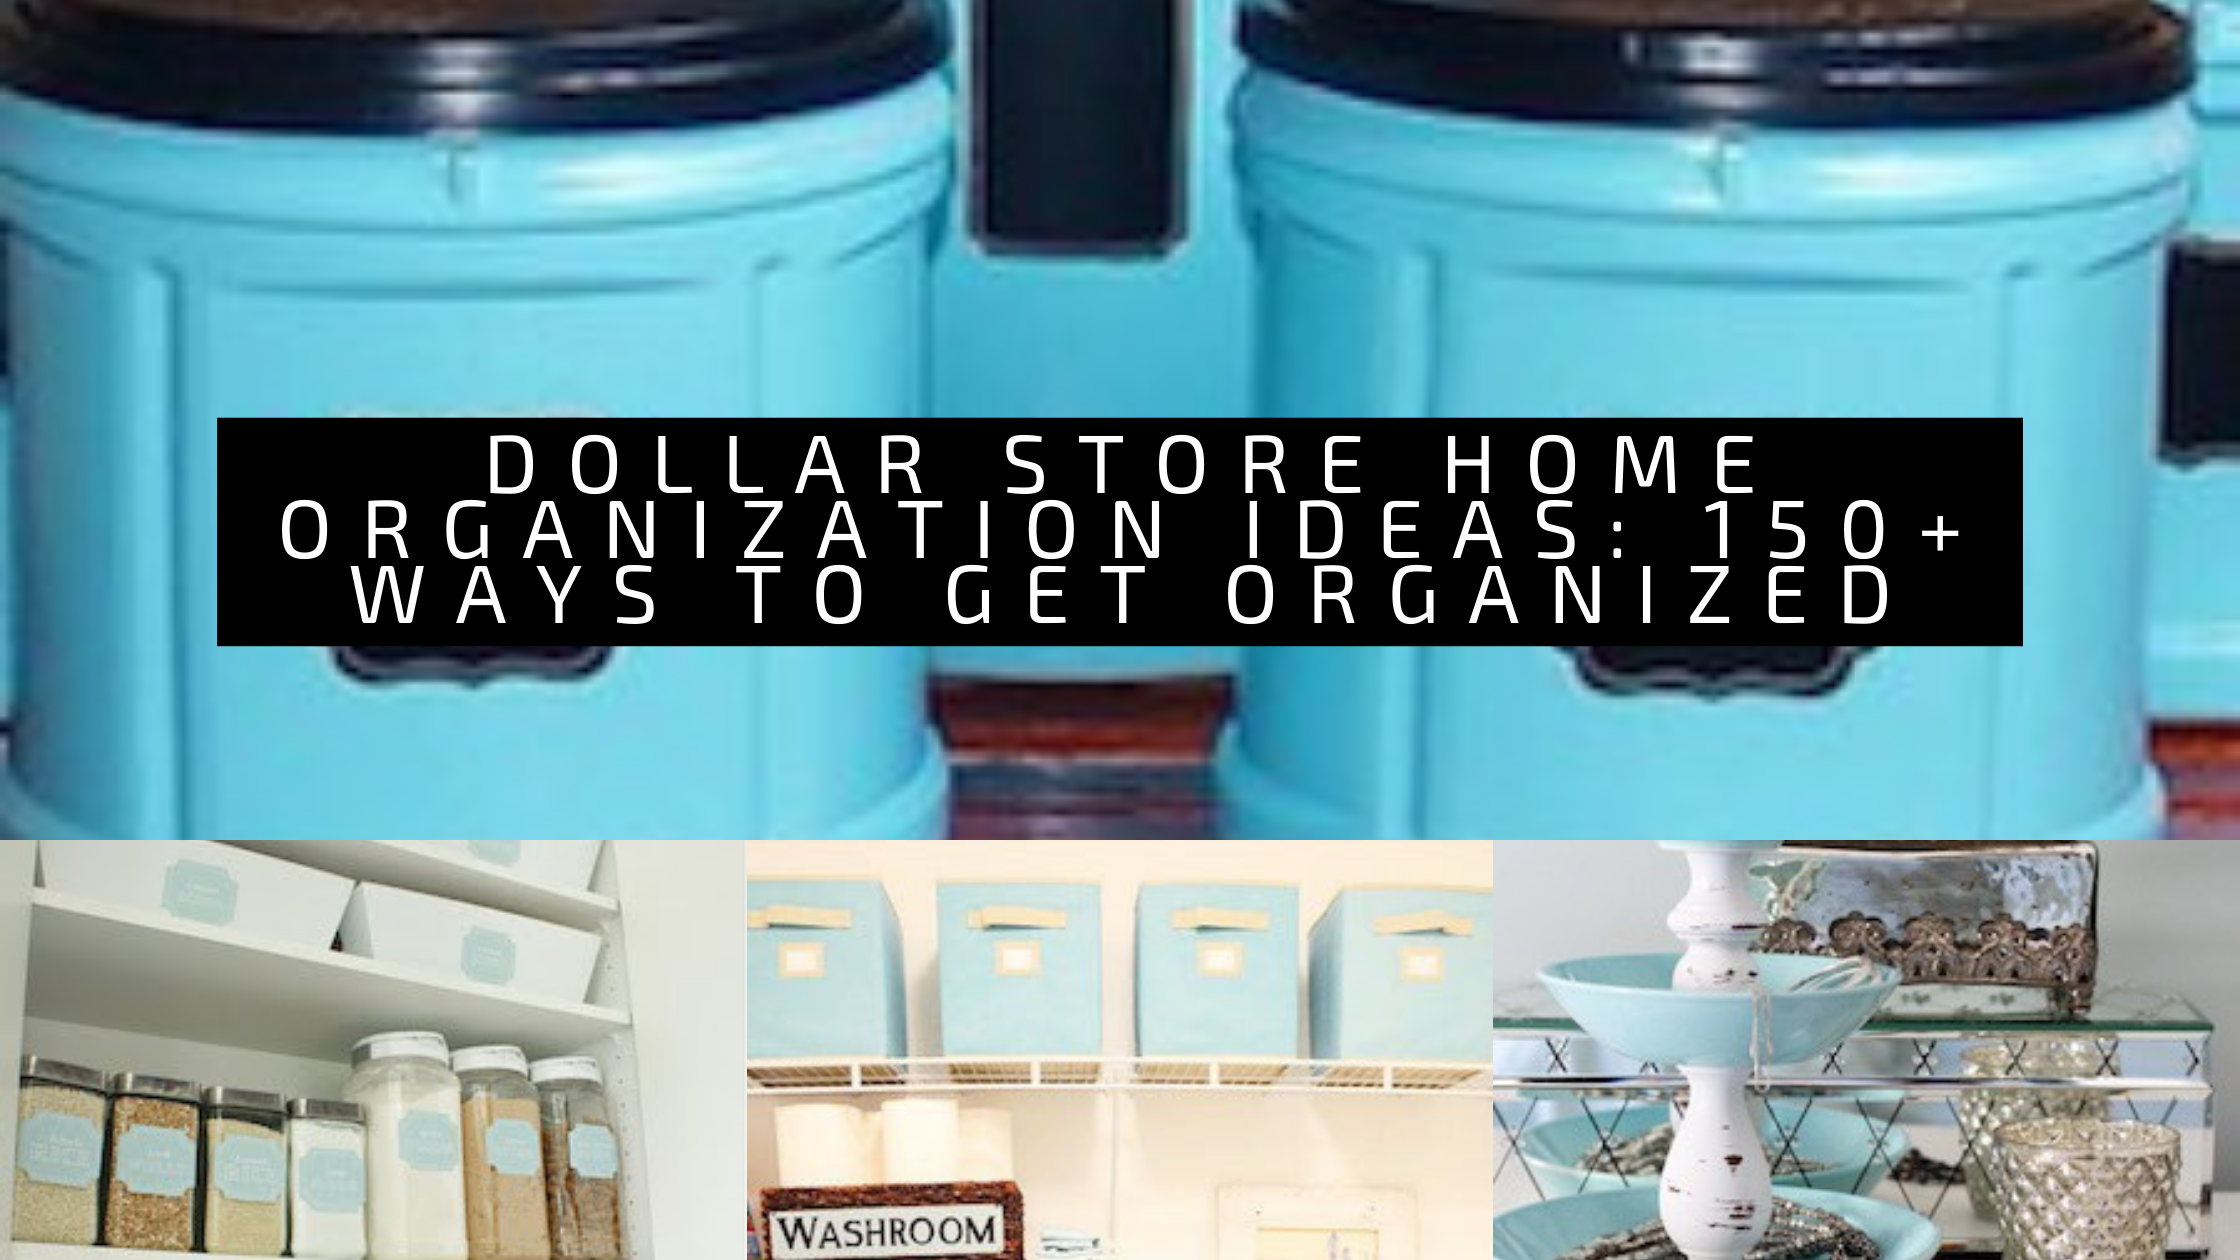 Dollar Store Home Organization Ideas: 150+ Ways to Get Organized 10